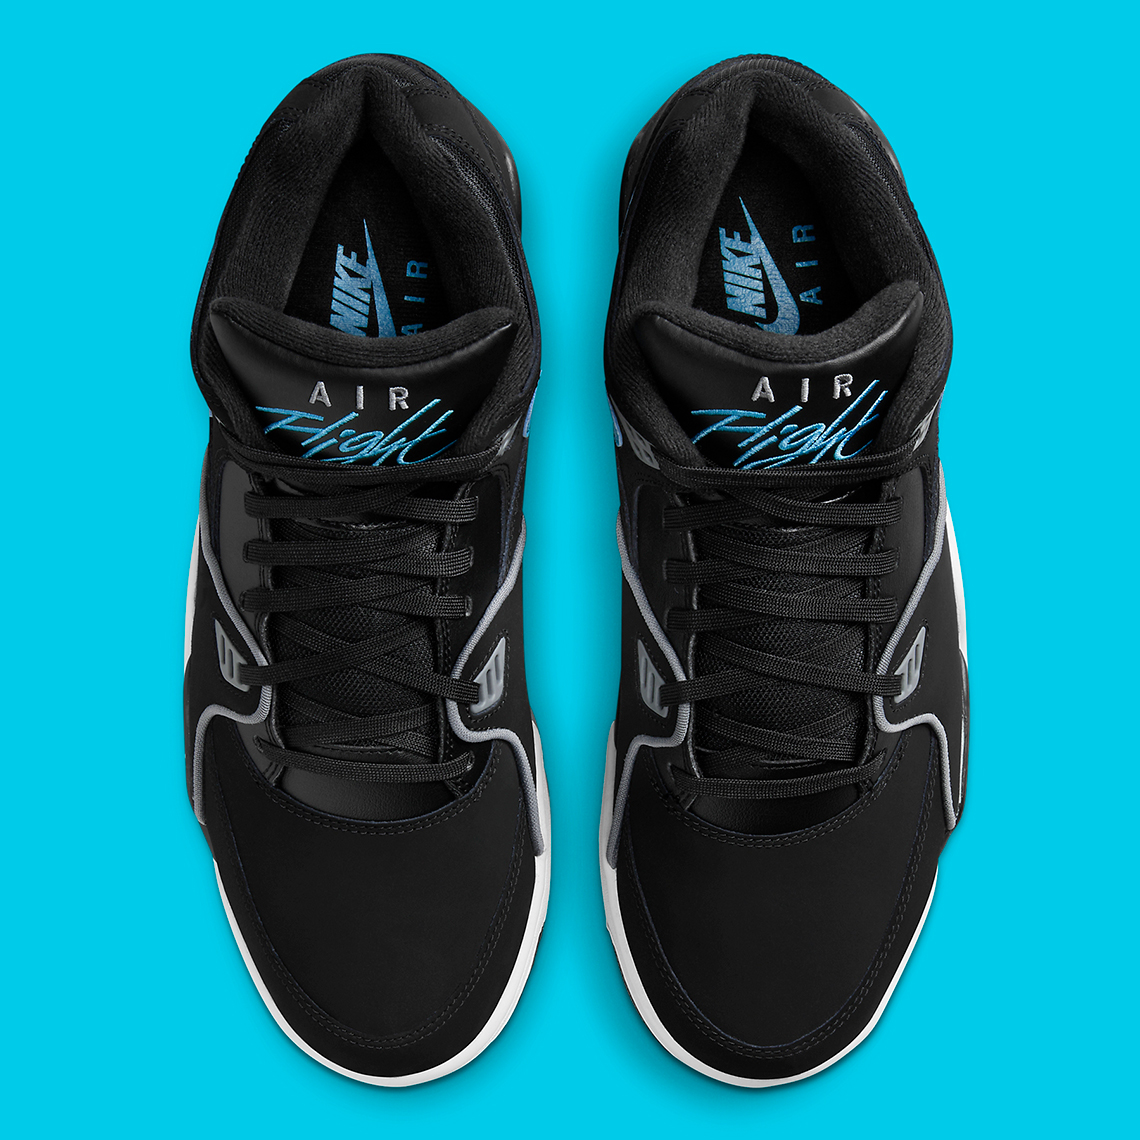 Nike custom nike air dunk shoes clearance boots amazon Black Blue Hf0102 001 4